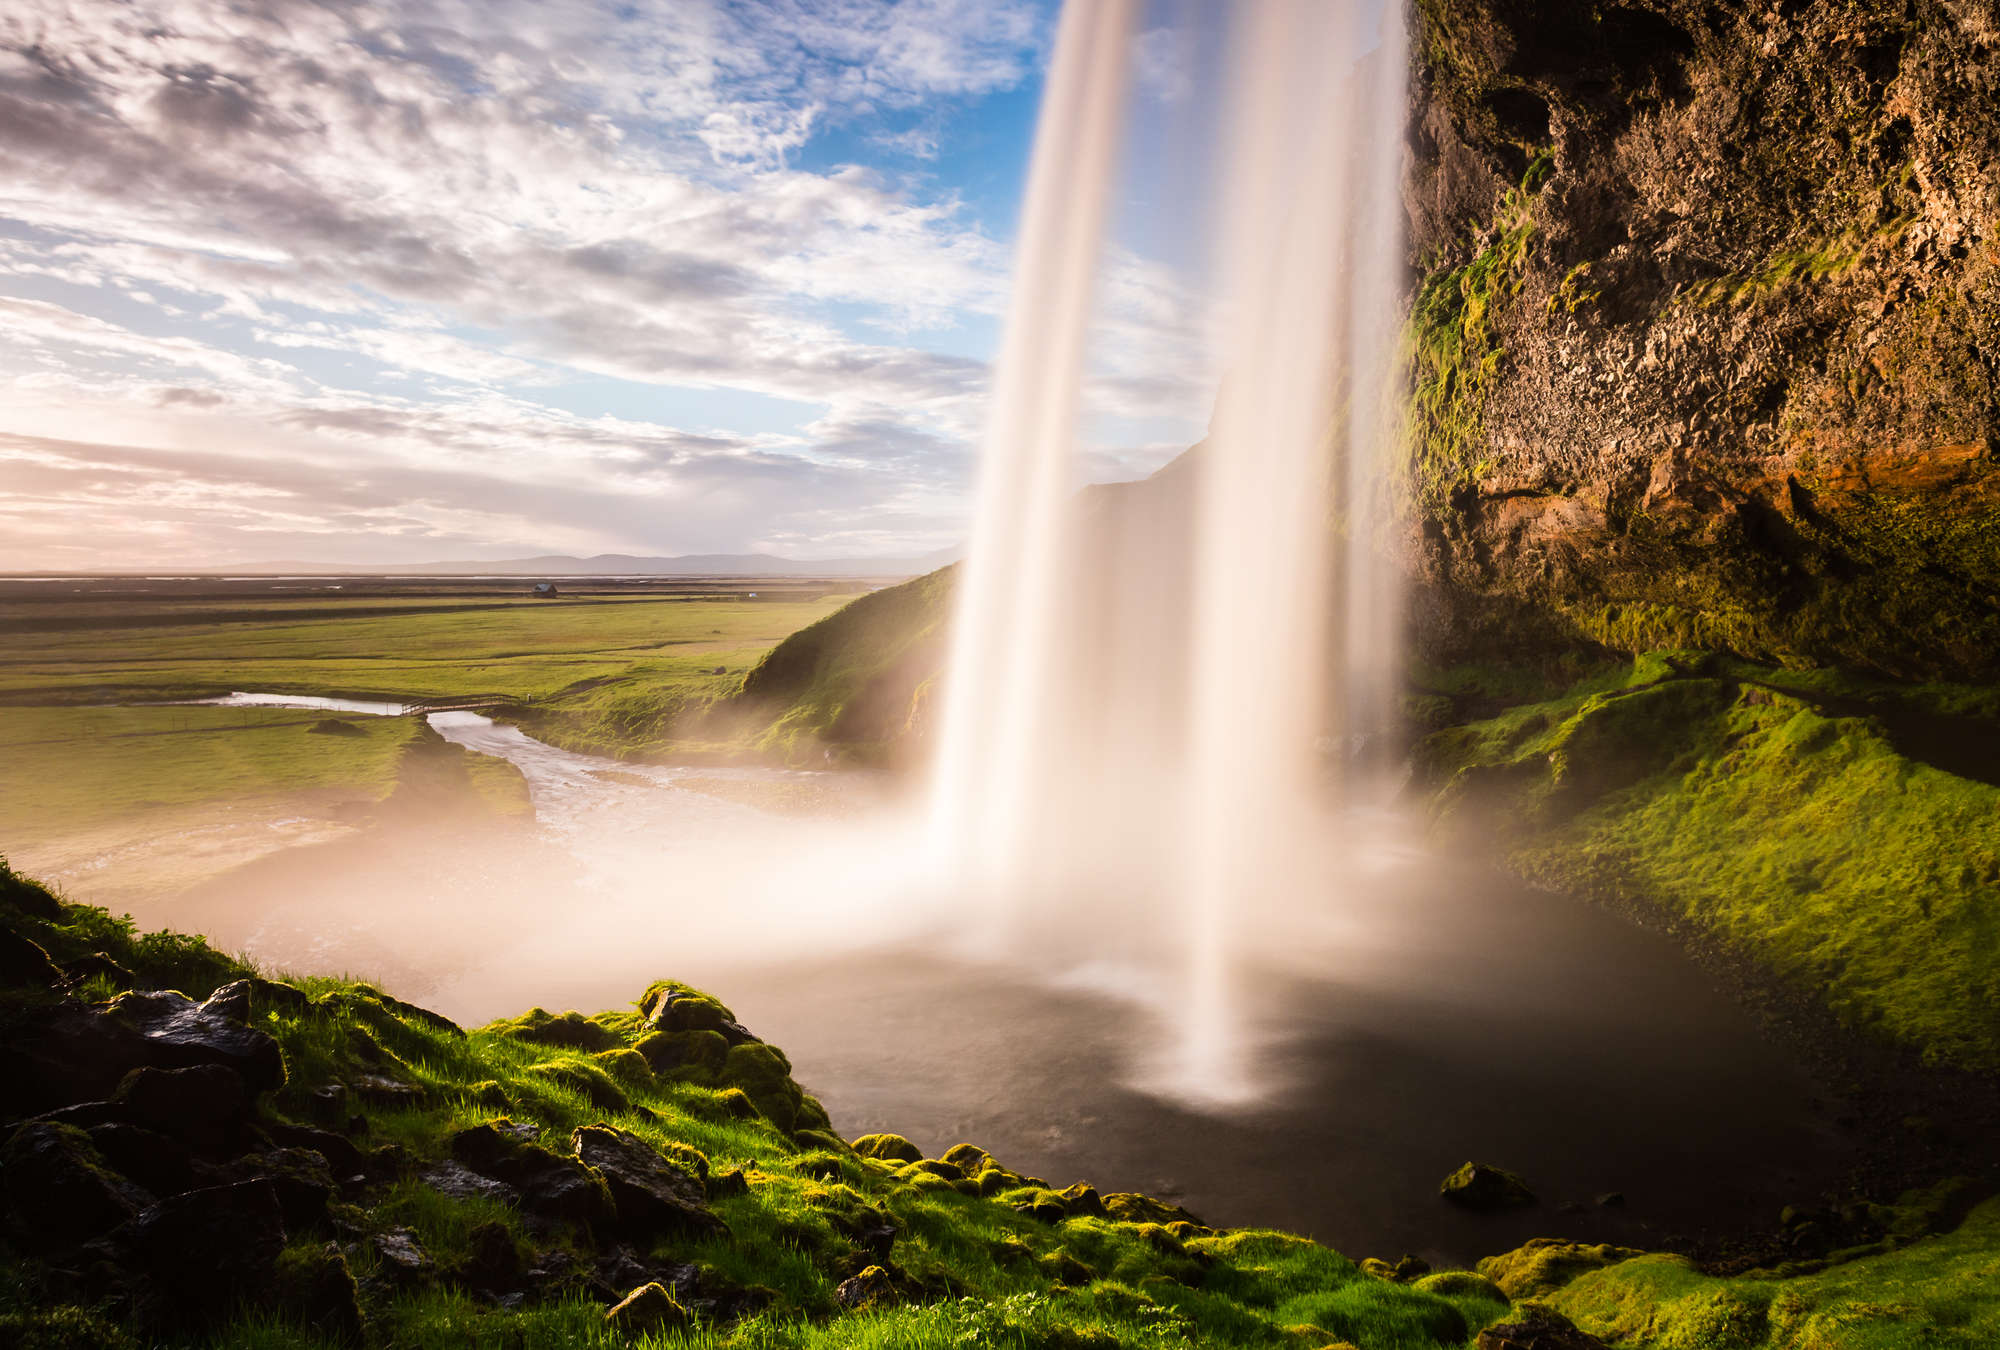             Fototapete Atemberaubende Landschaft mit Wasserfall
        